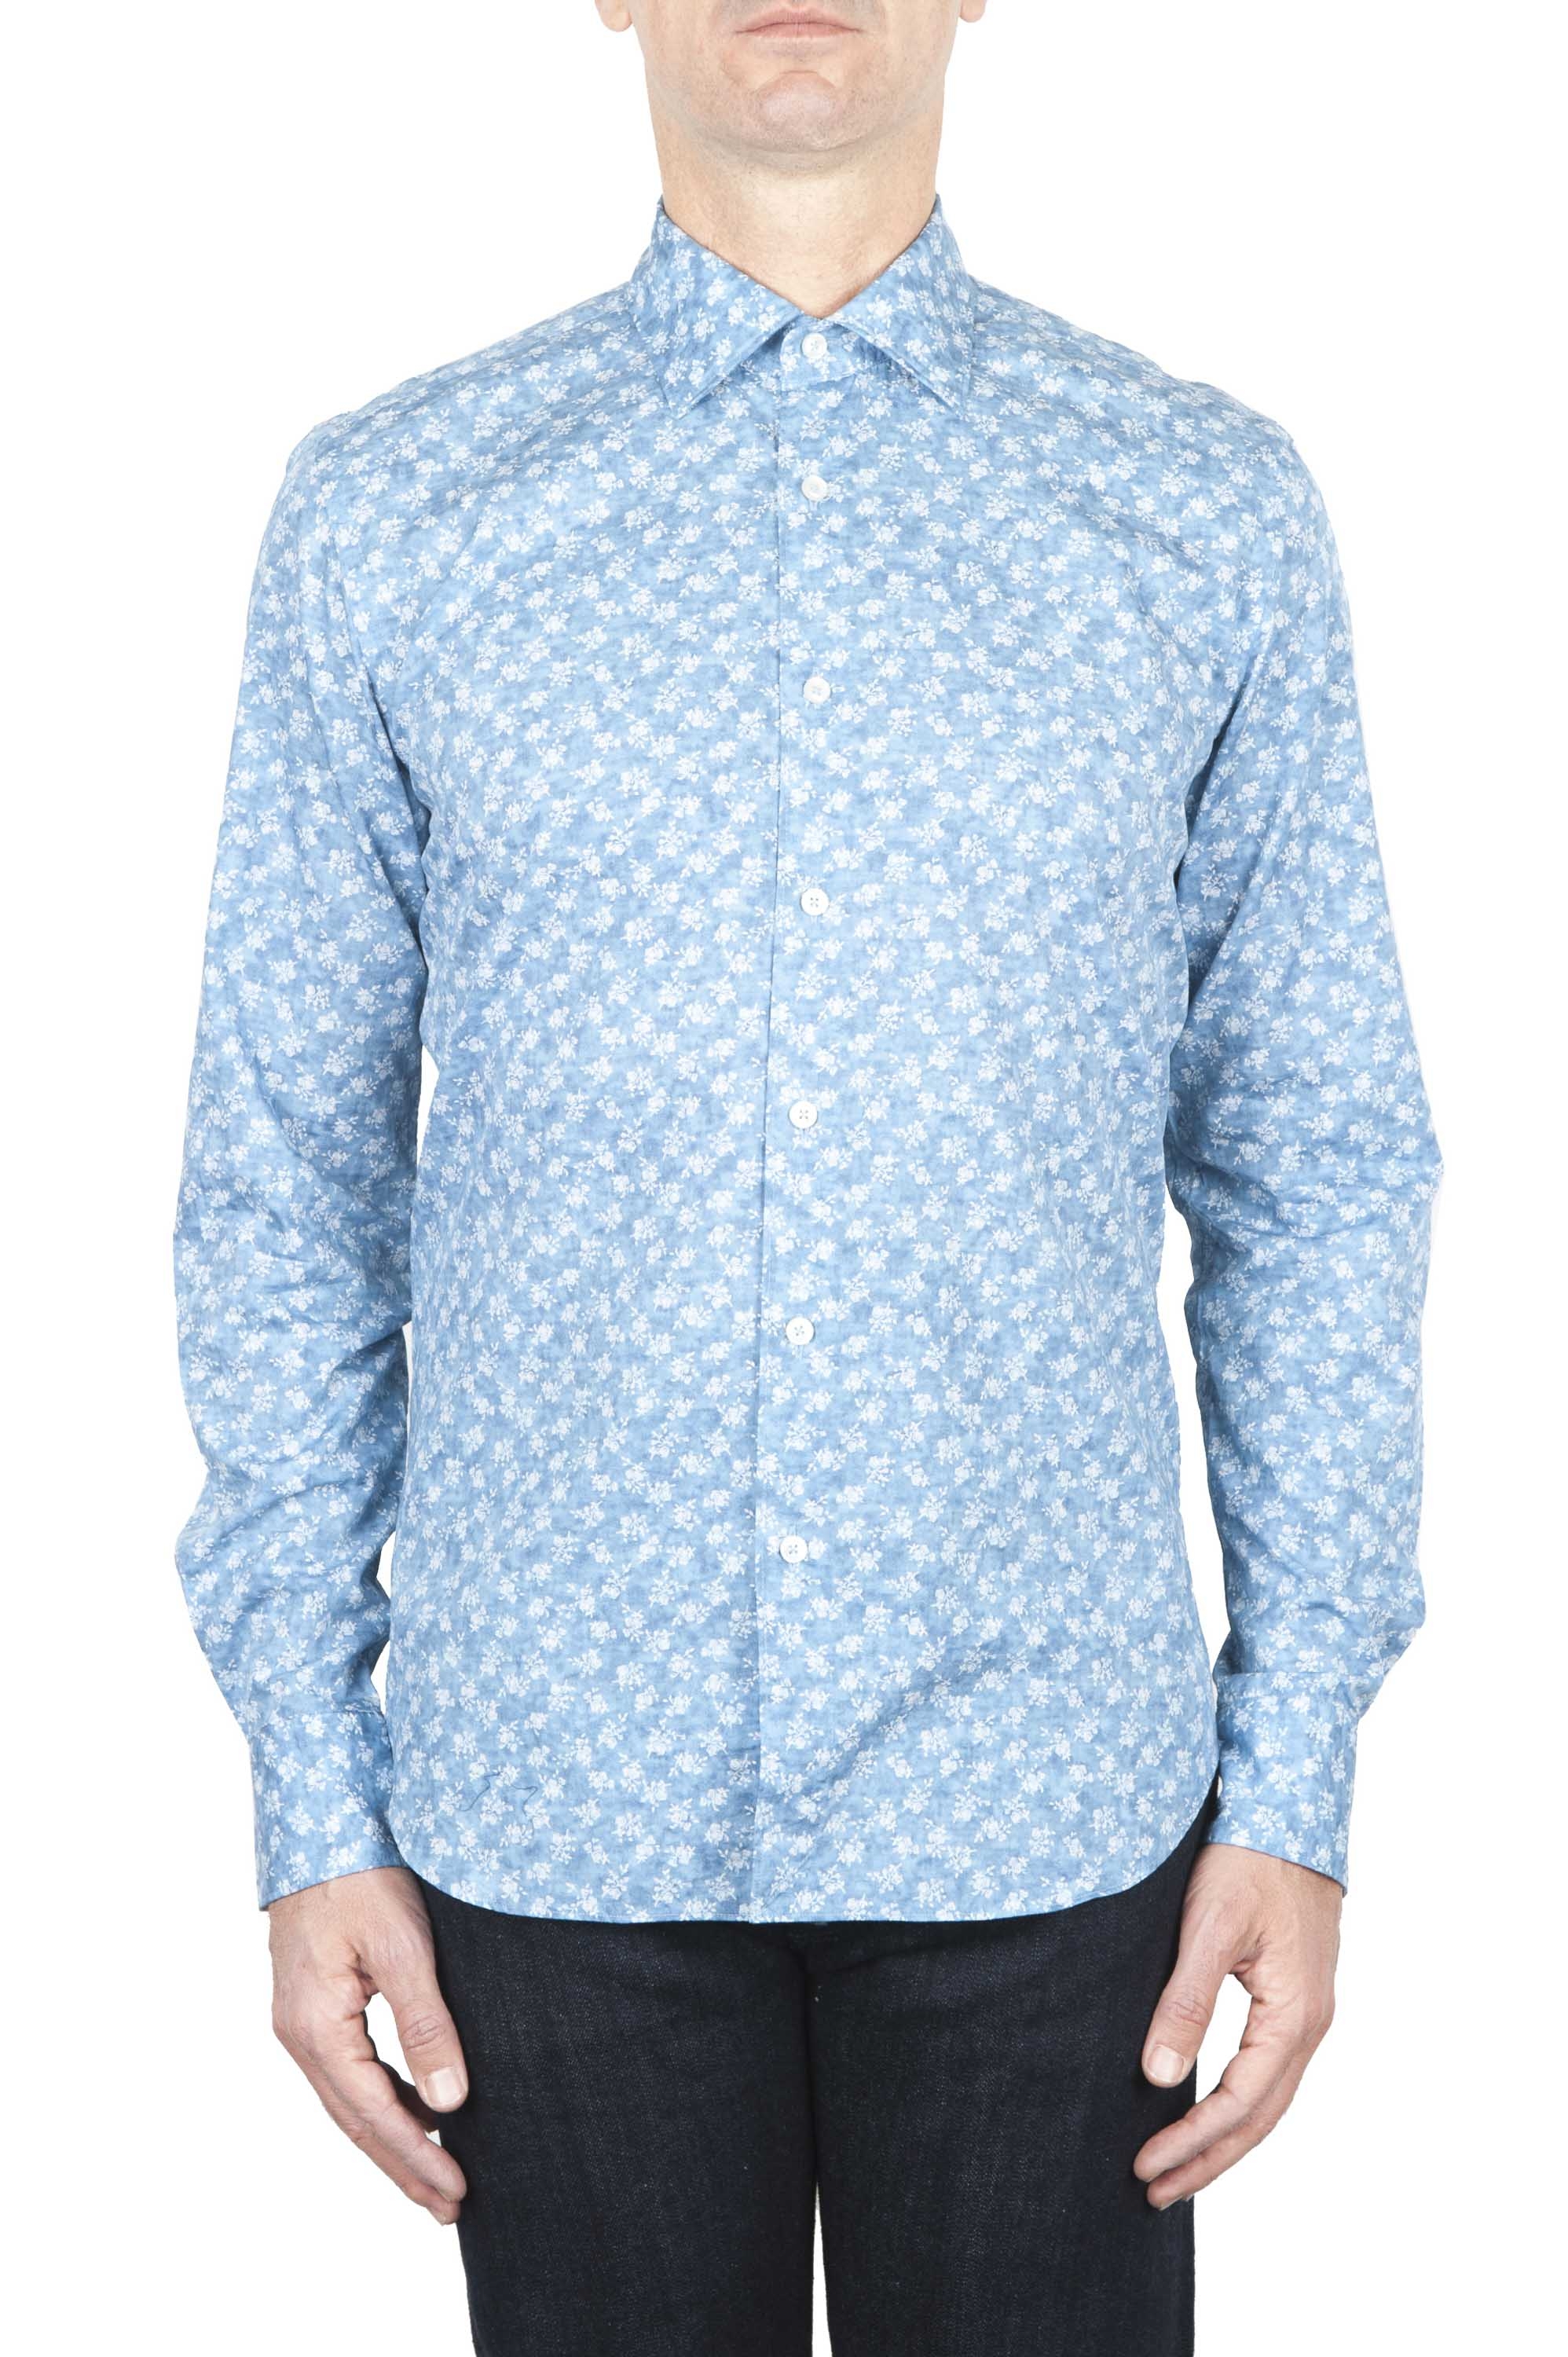 SBU 01590 Geometric printed pattern light blue cotton shirt 01